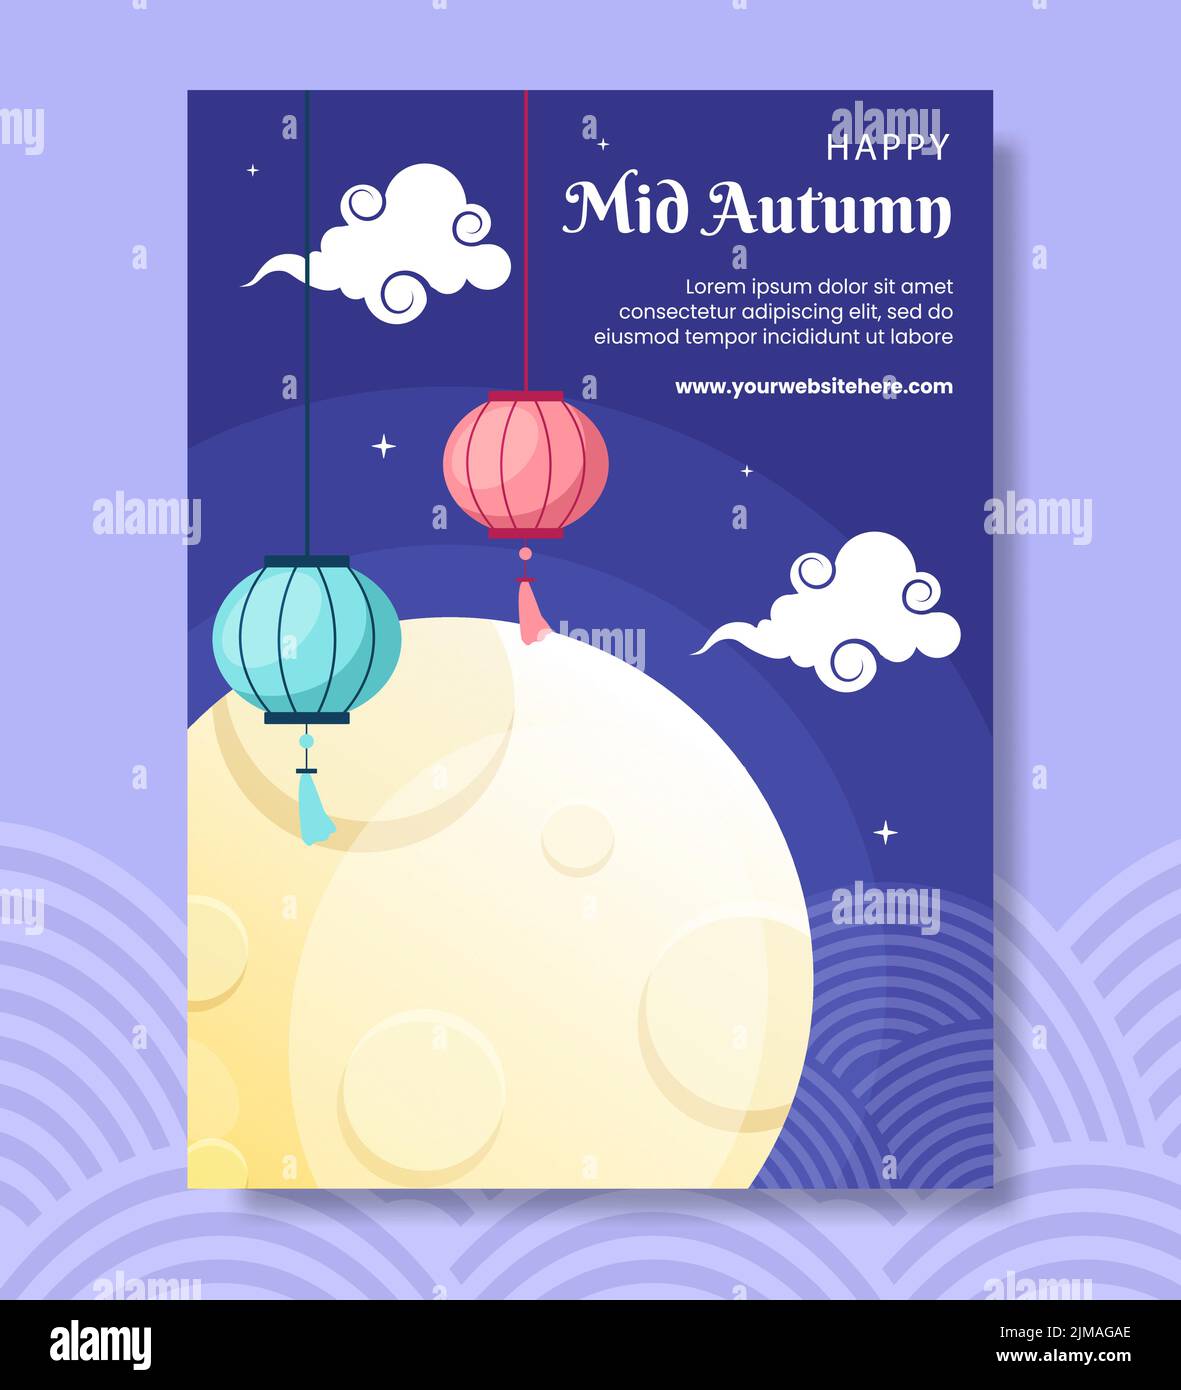 Mid Autumn Poster Template Flat Cartoon Background Vector Illustration Stock Vector